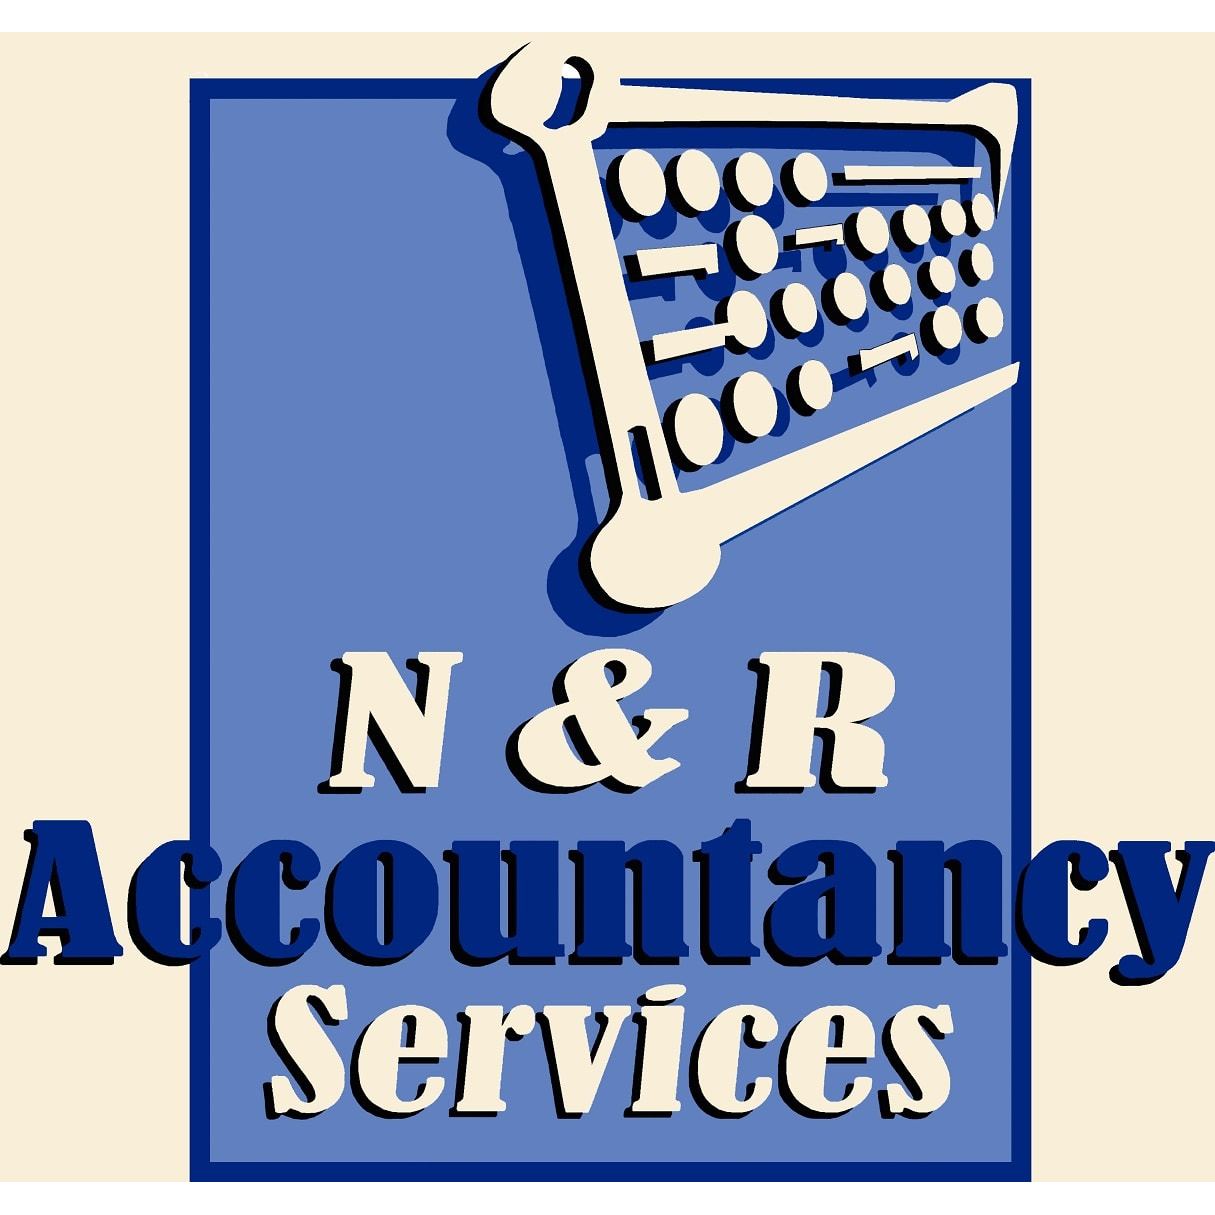 N & R Accountancy Services Logo